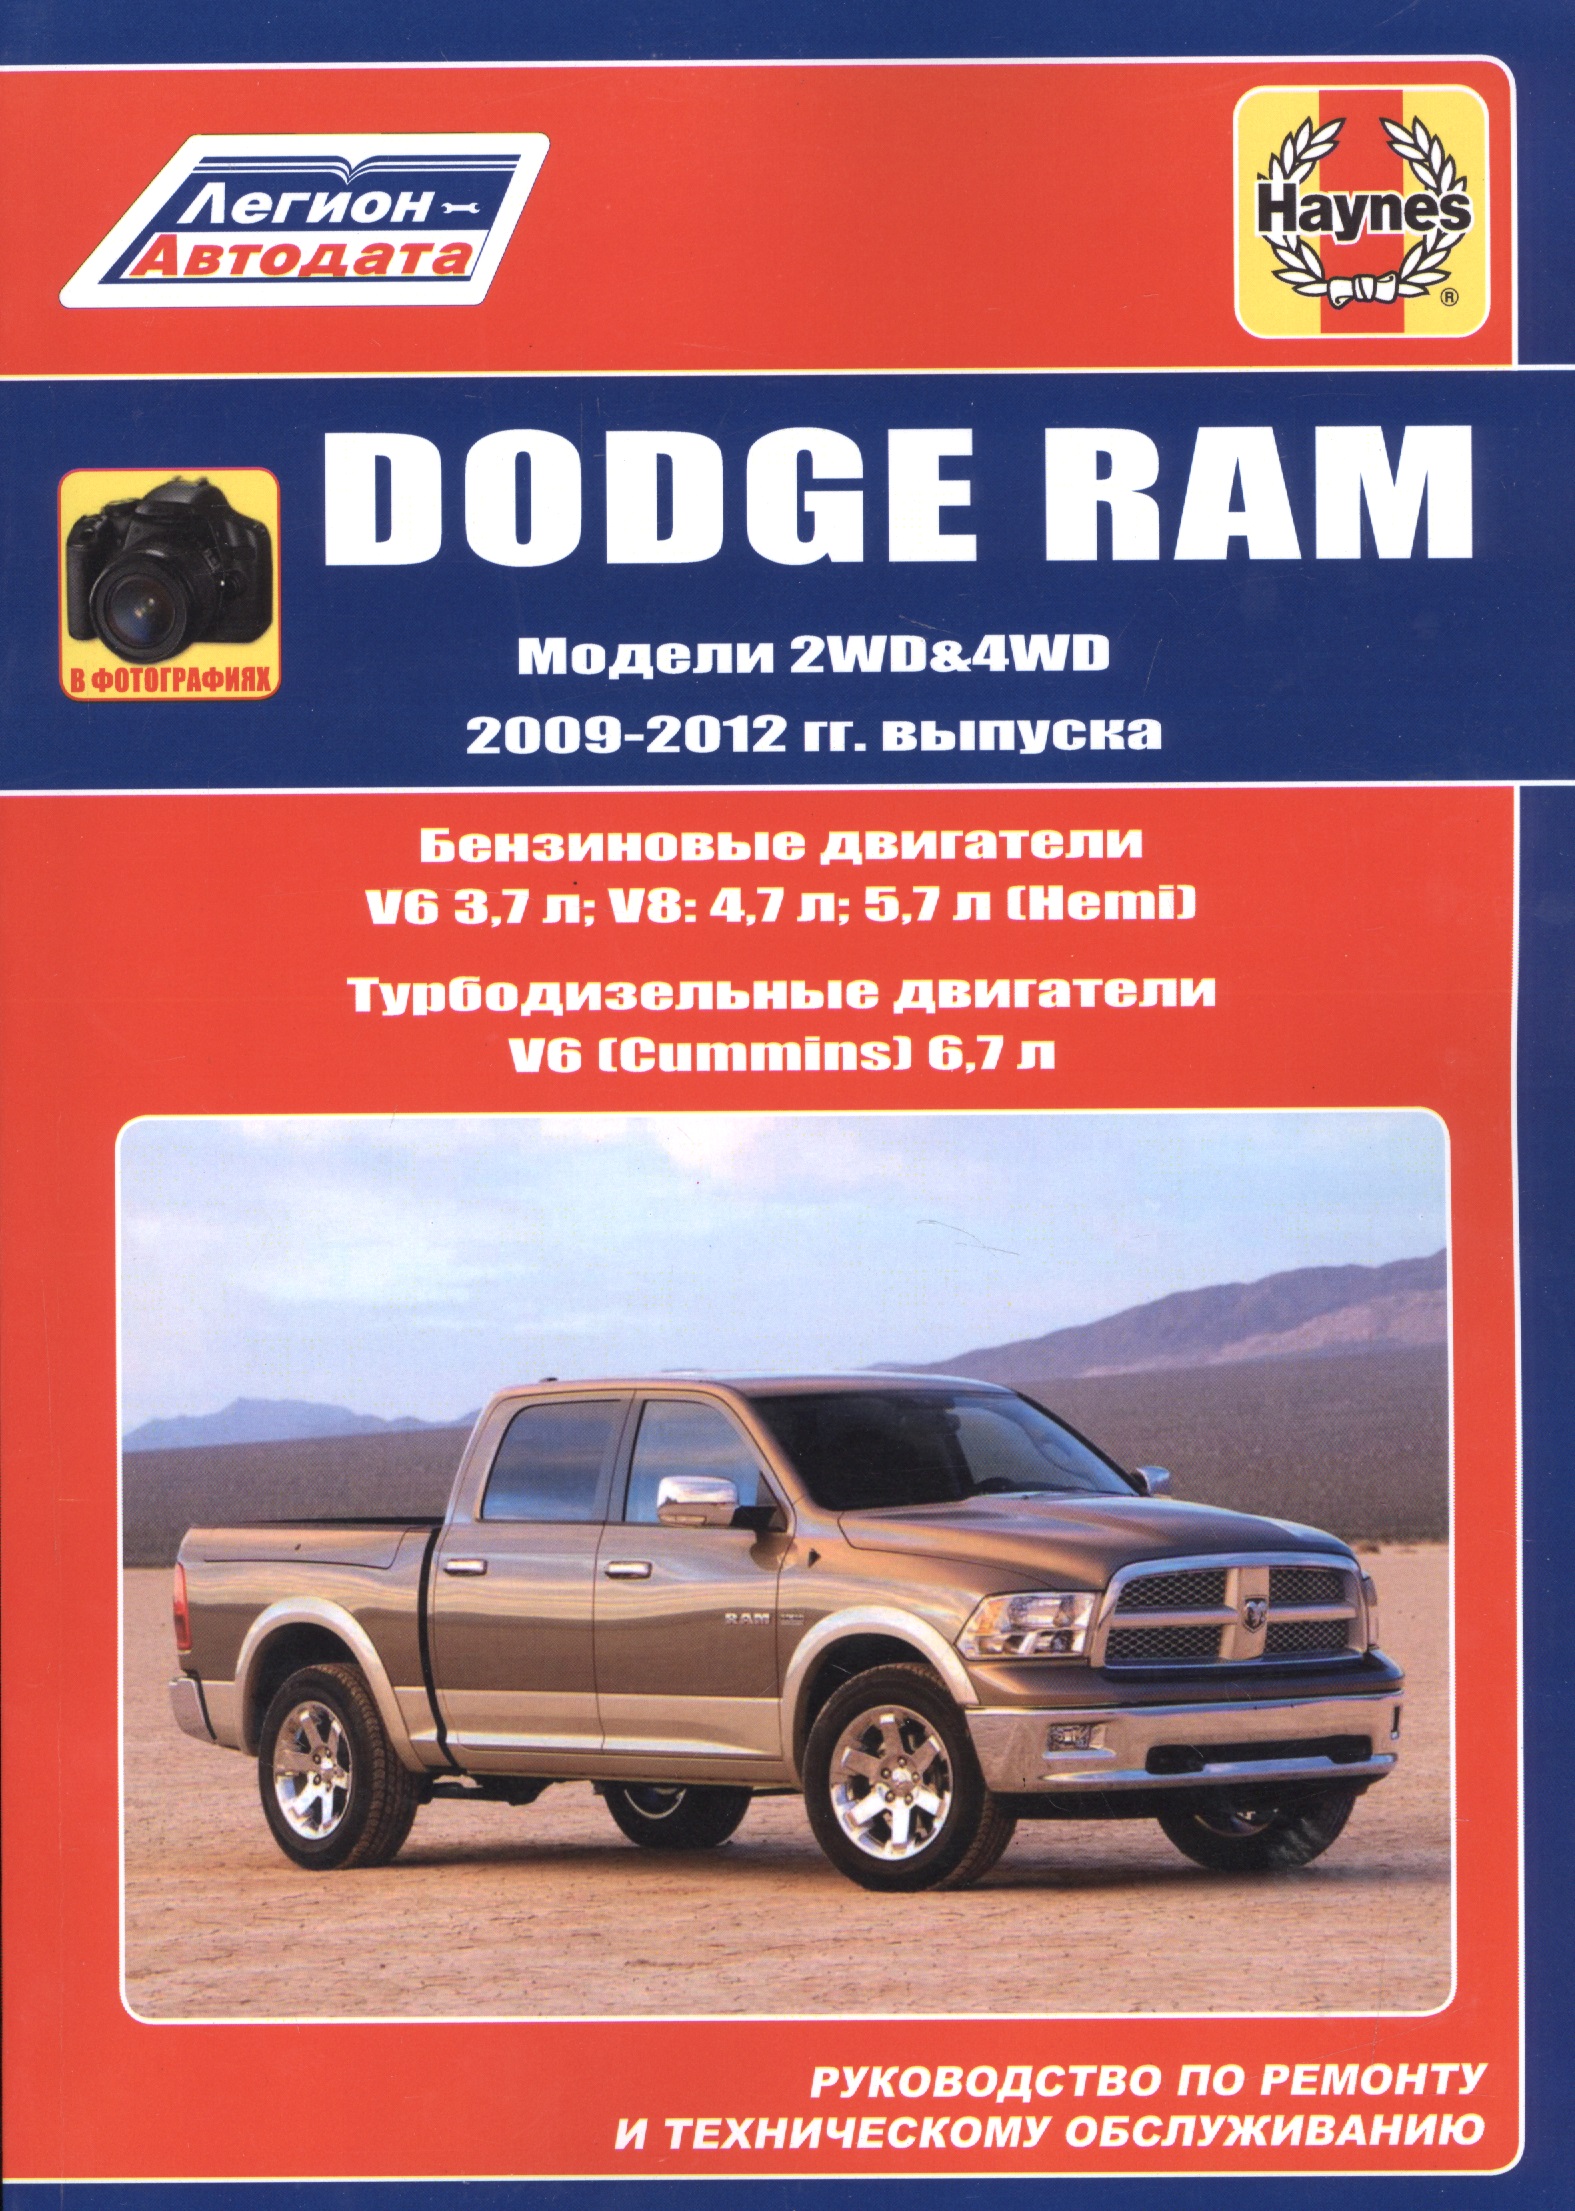 Dodge RAM.  2WD 2009 - 2012 .    V6 3, 7. V8: 4, 7 .5, 7 (Hemi)   V6 (Cummins) 6, 7 .      